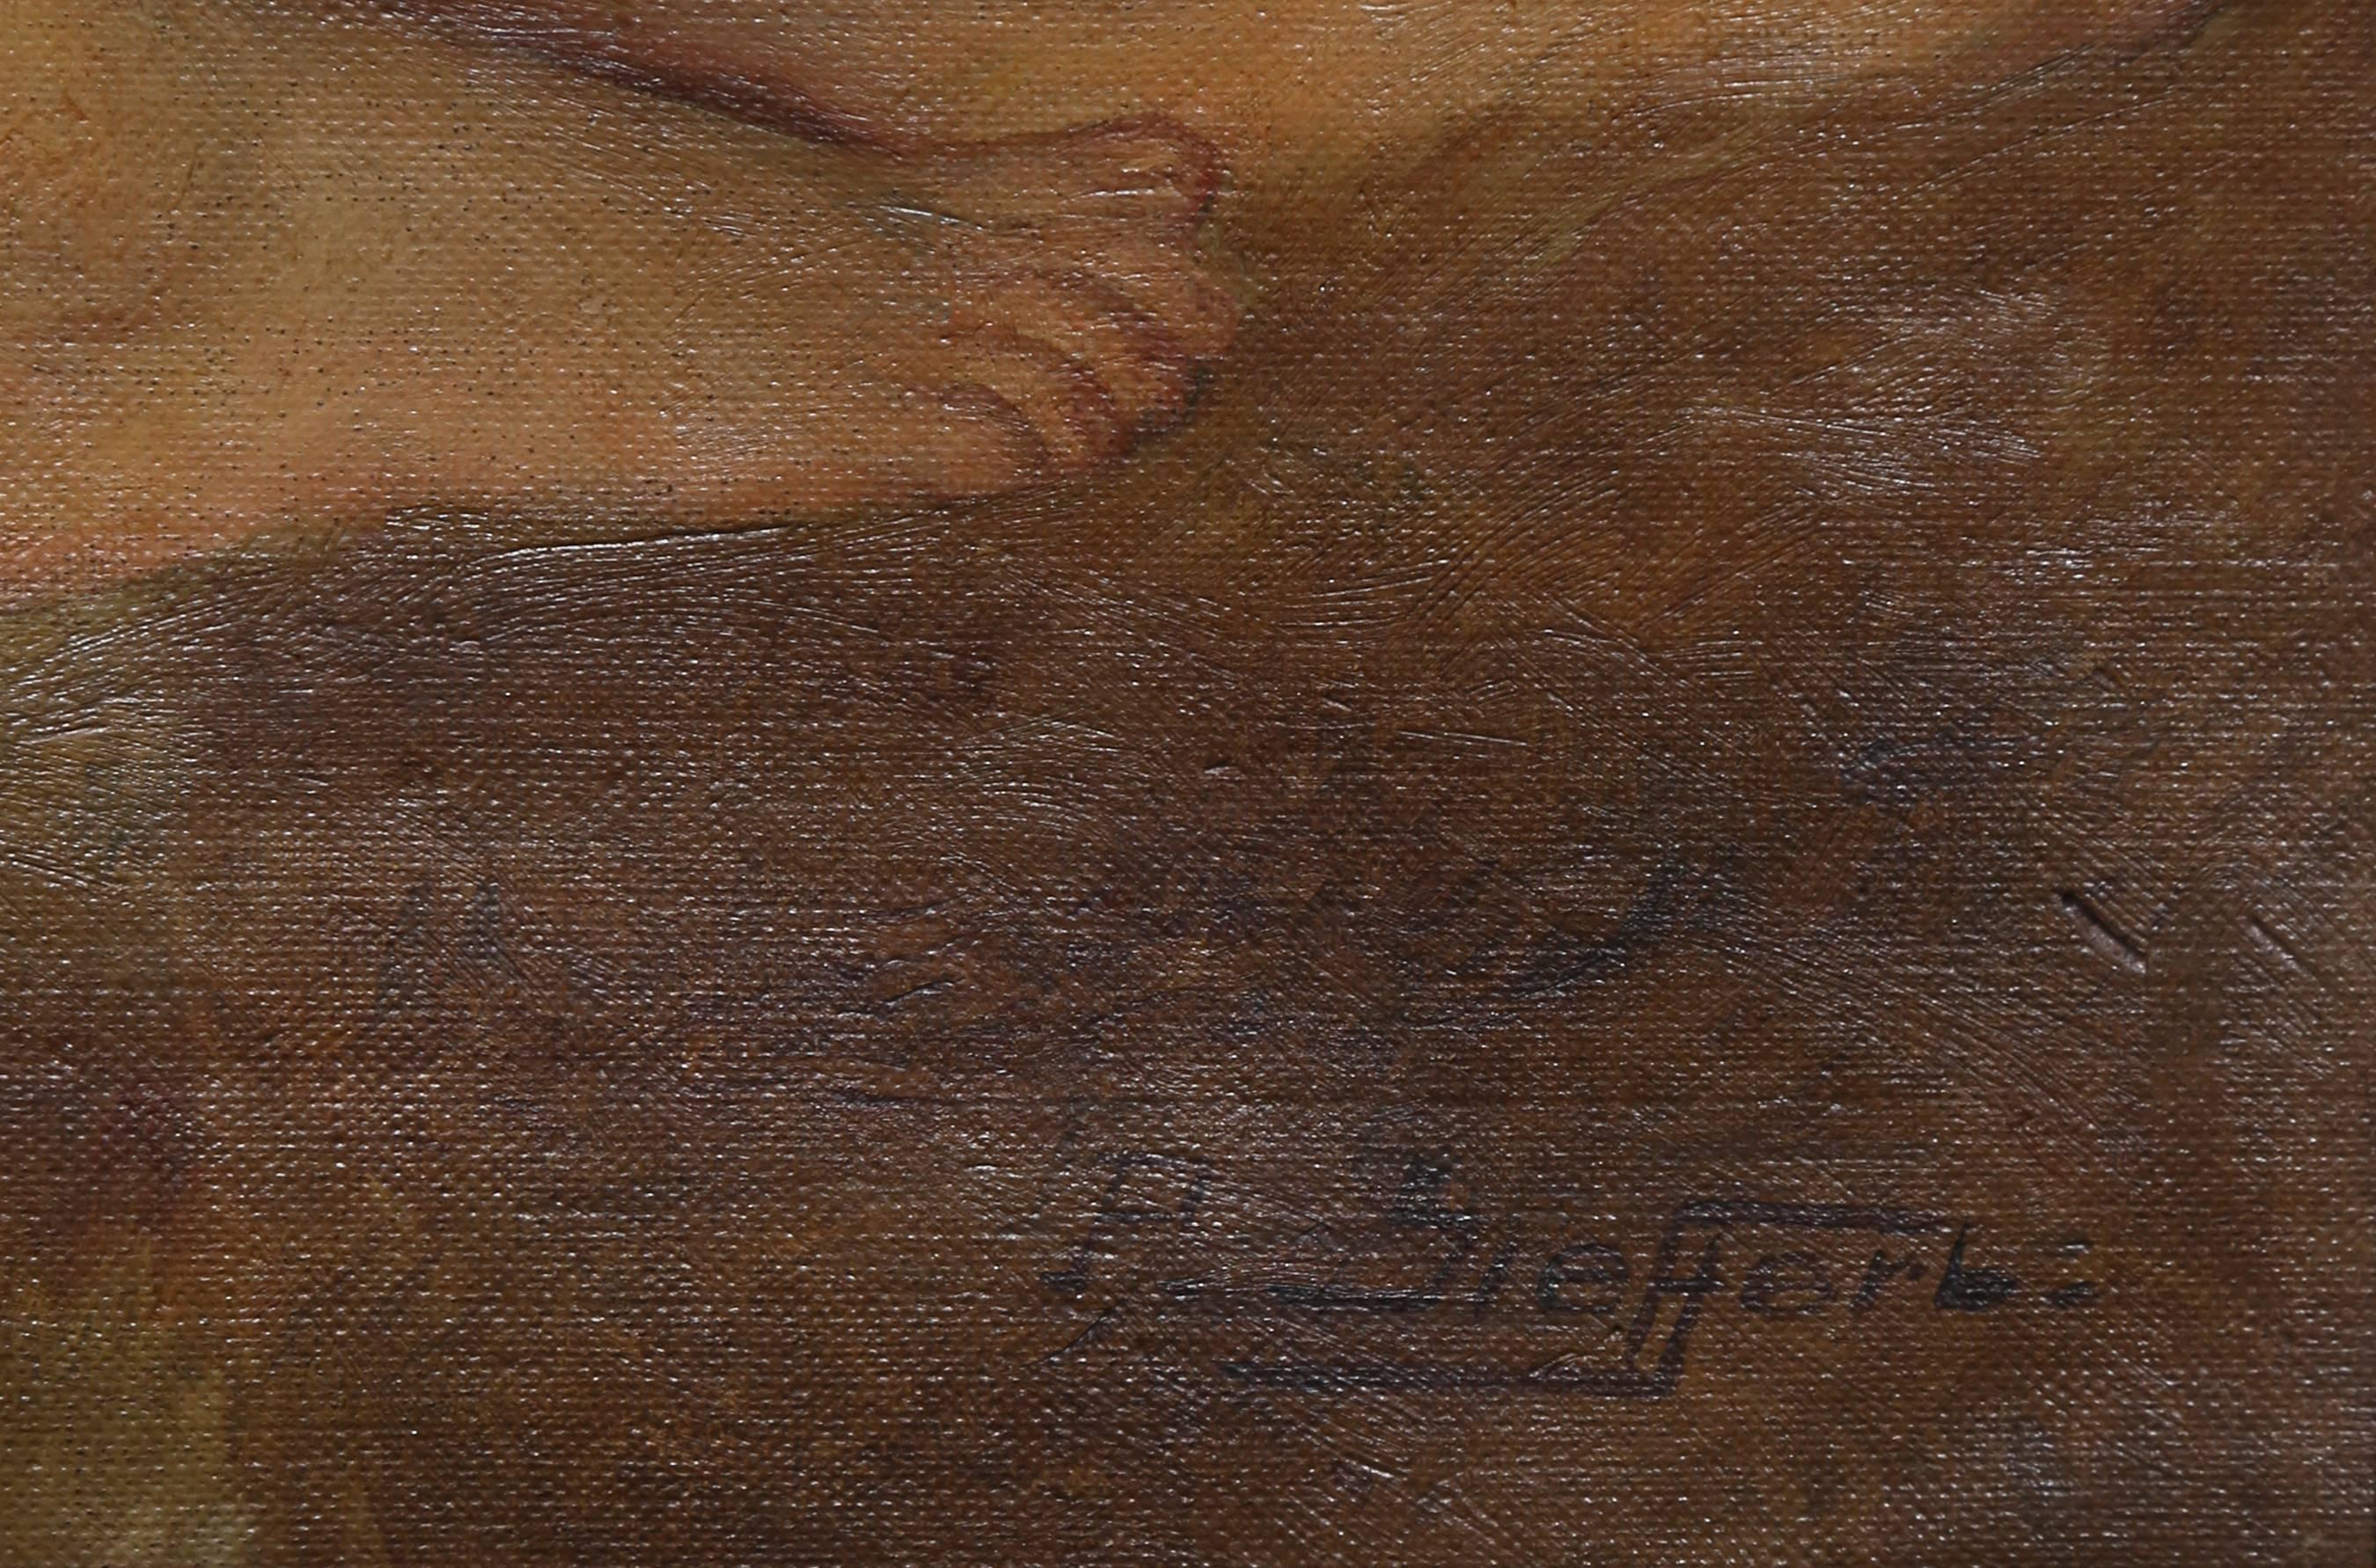 Reclining Nude - Painting by Paul Sieffert